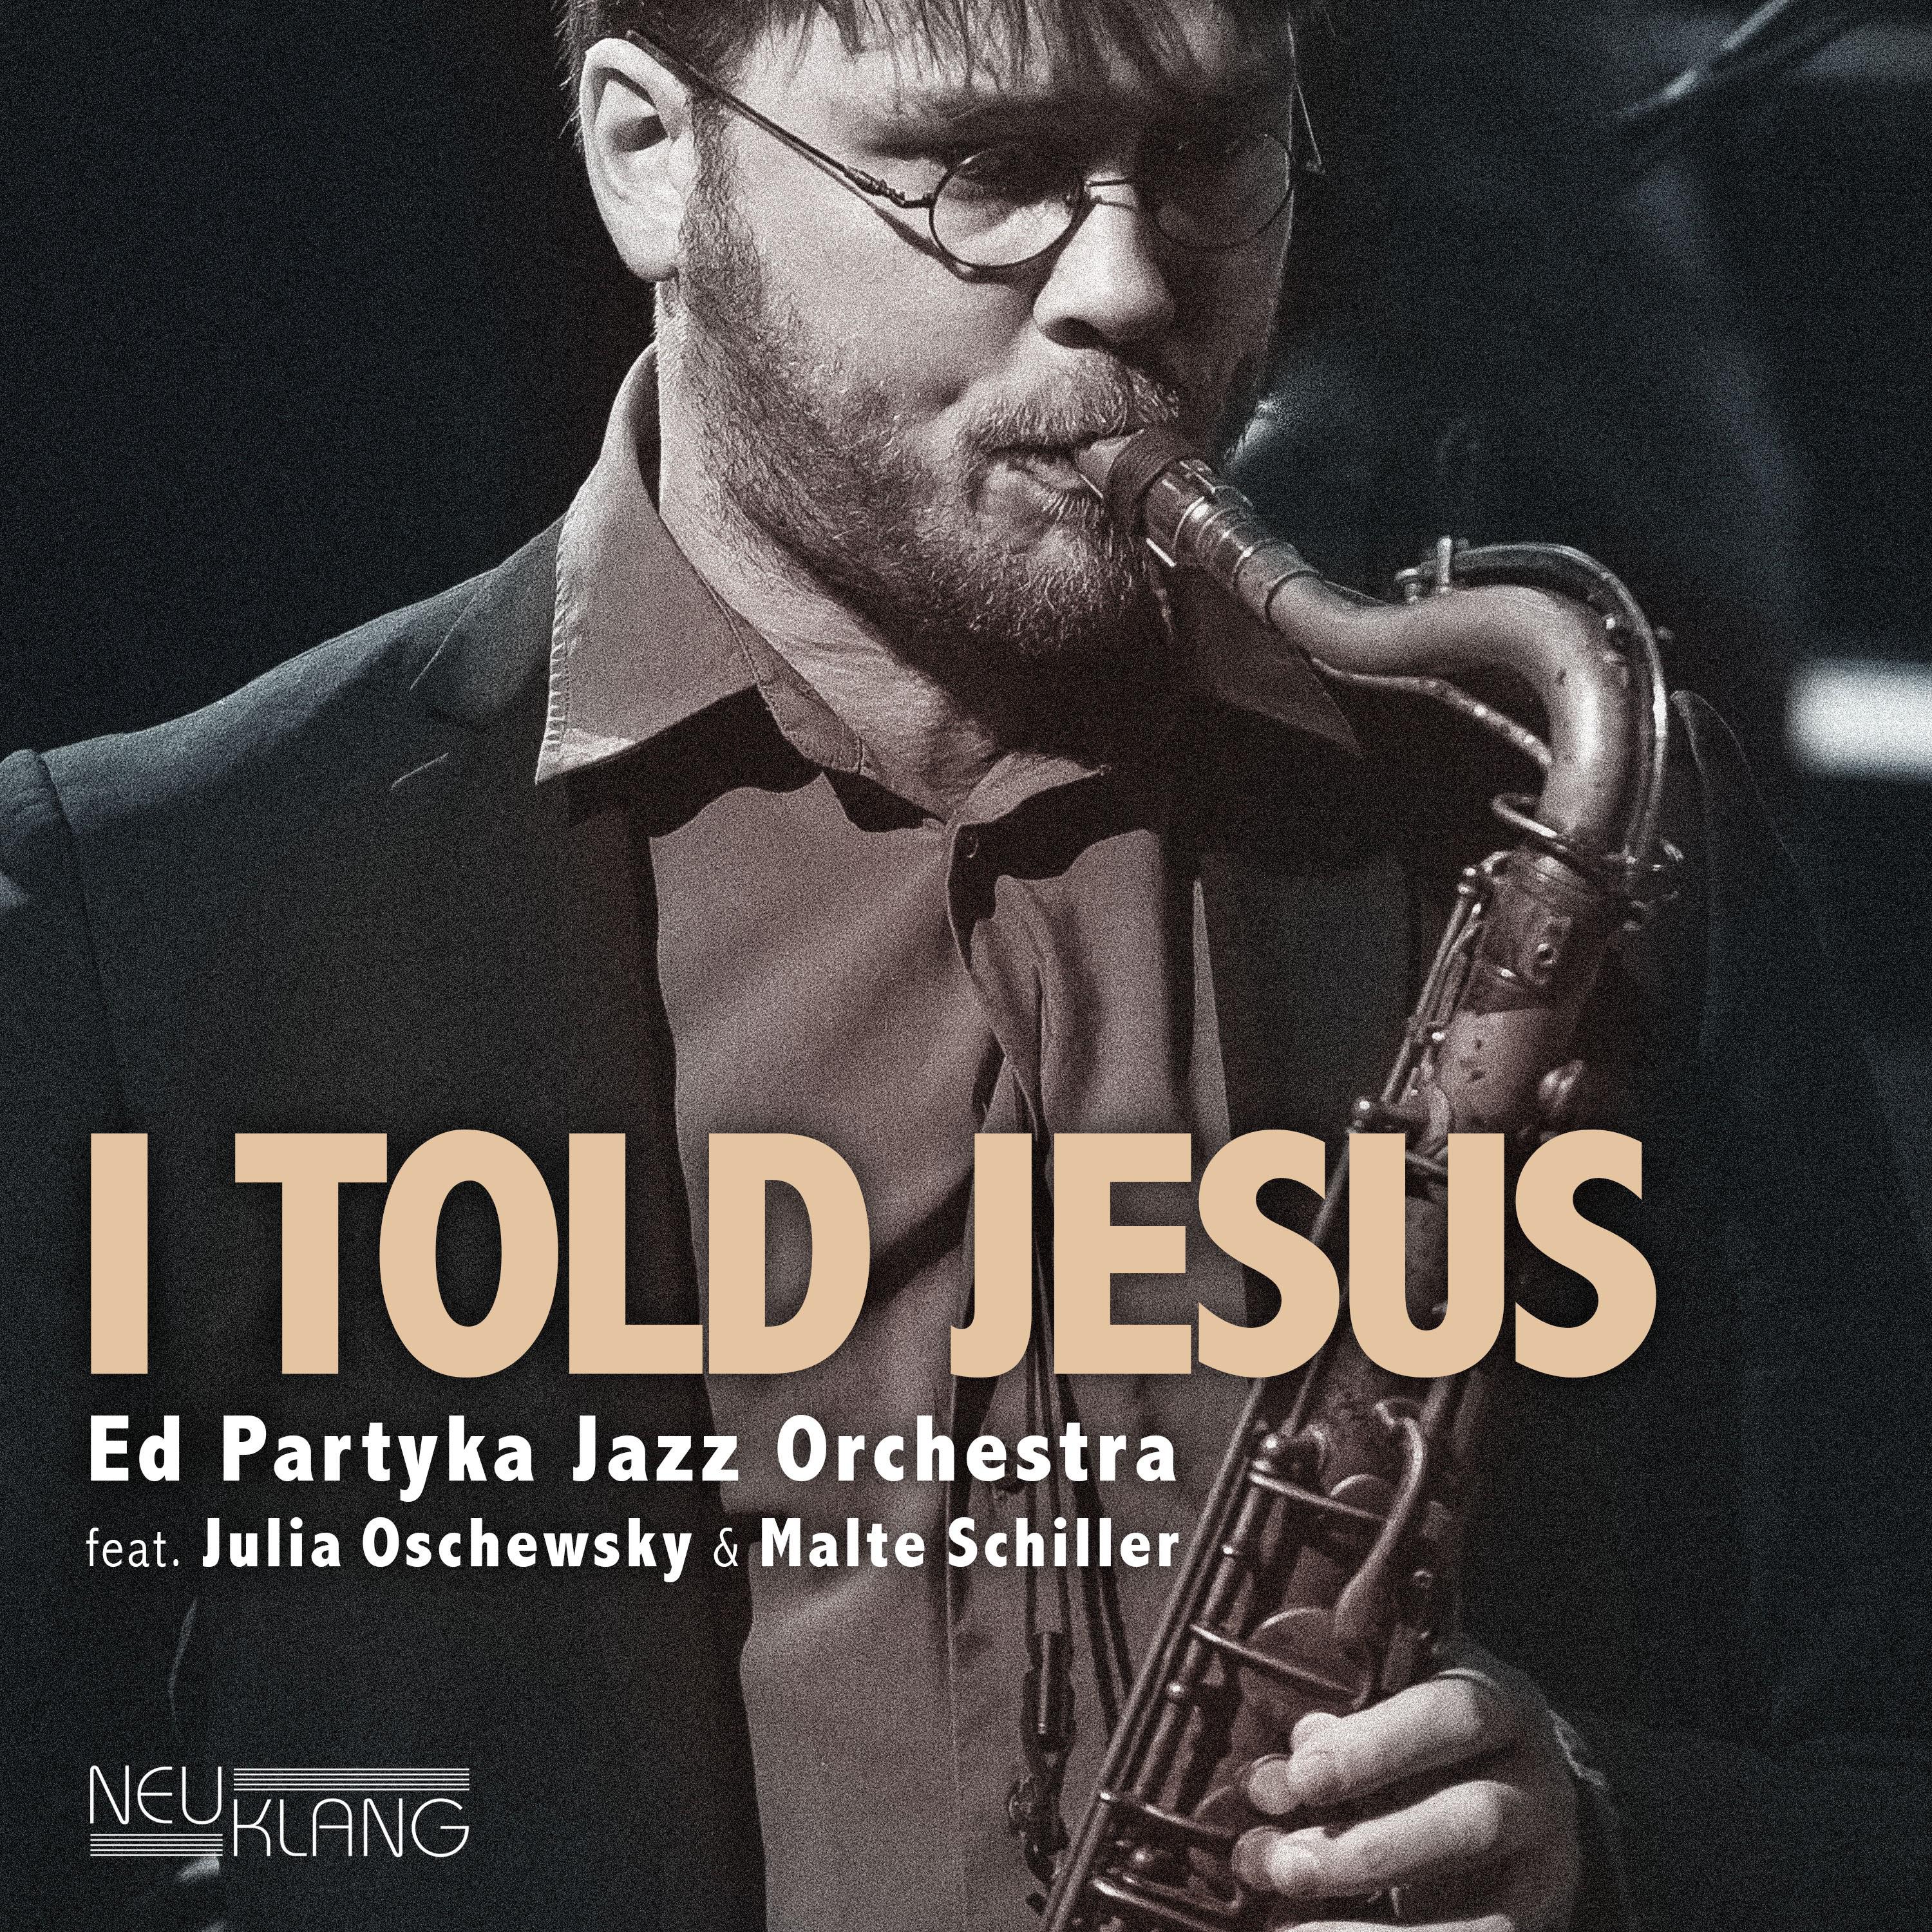 Ed Partyka Jazz Orchestra - I Told Jesus